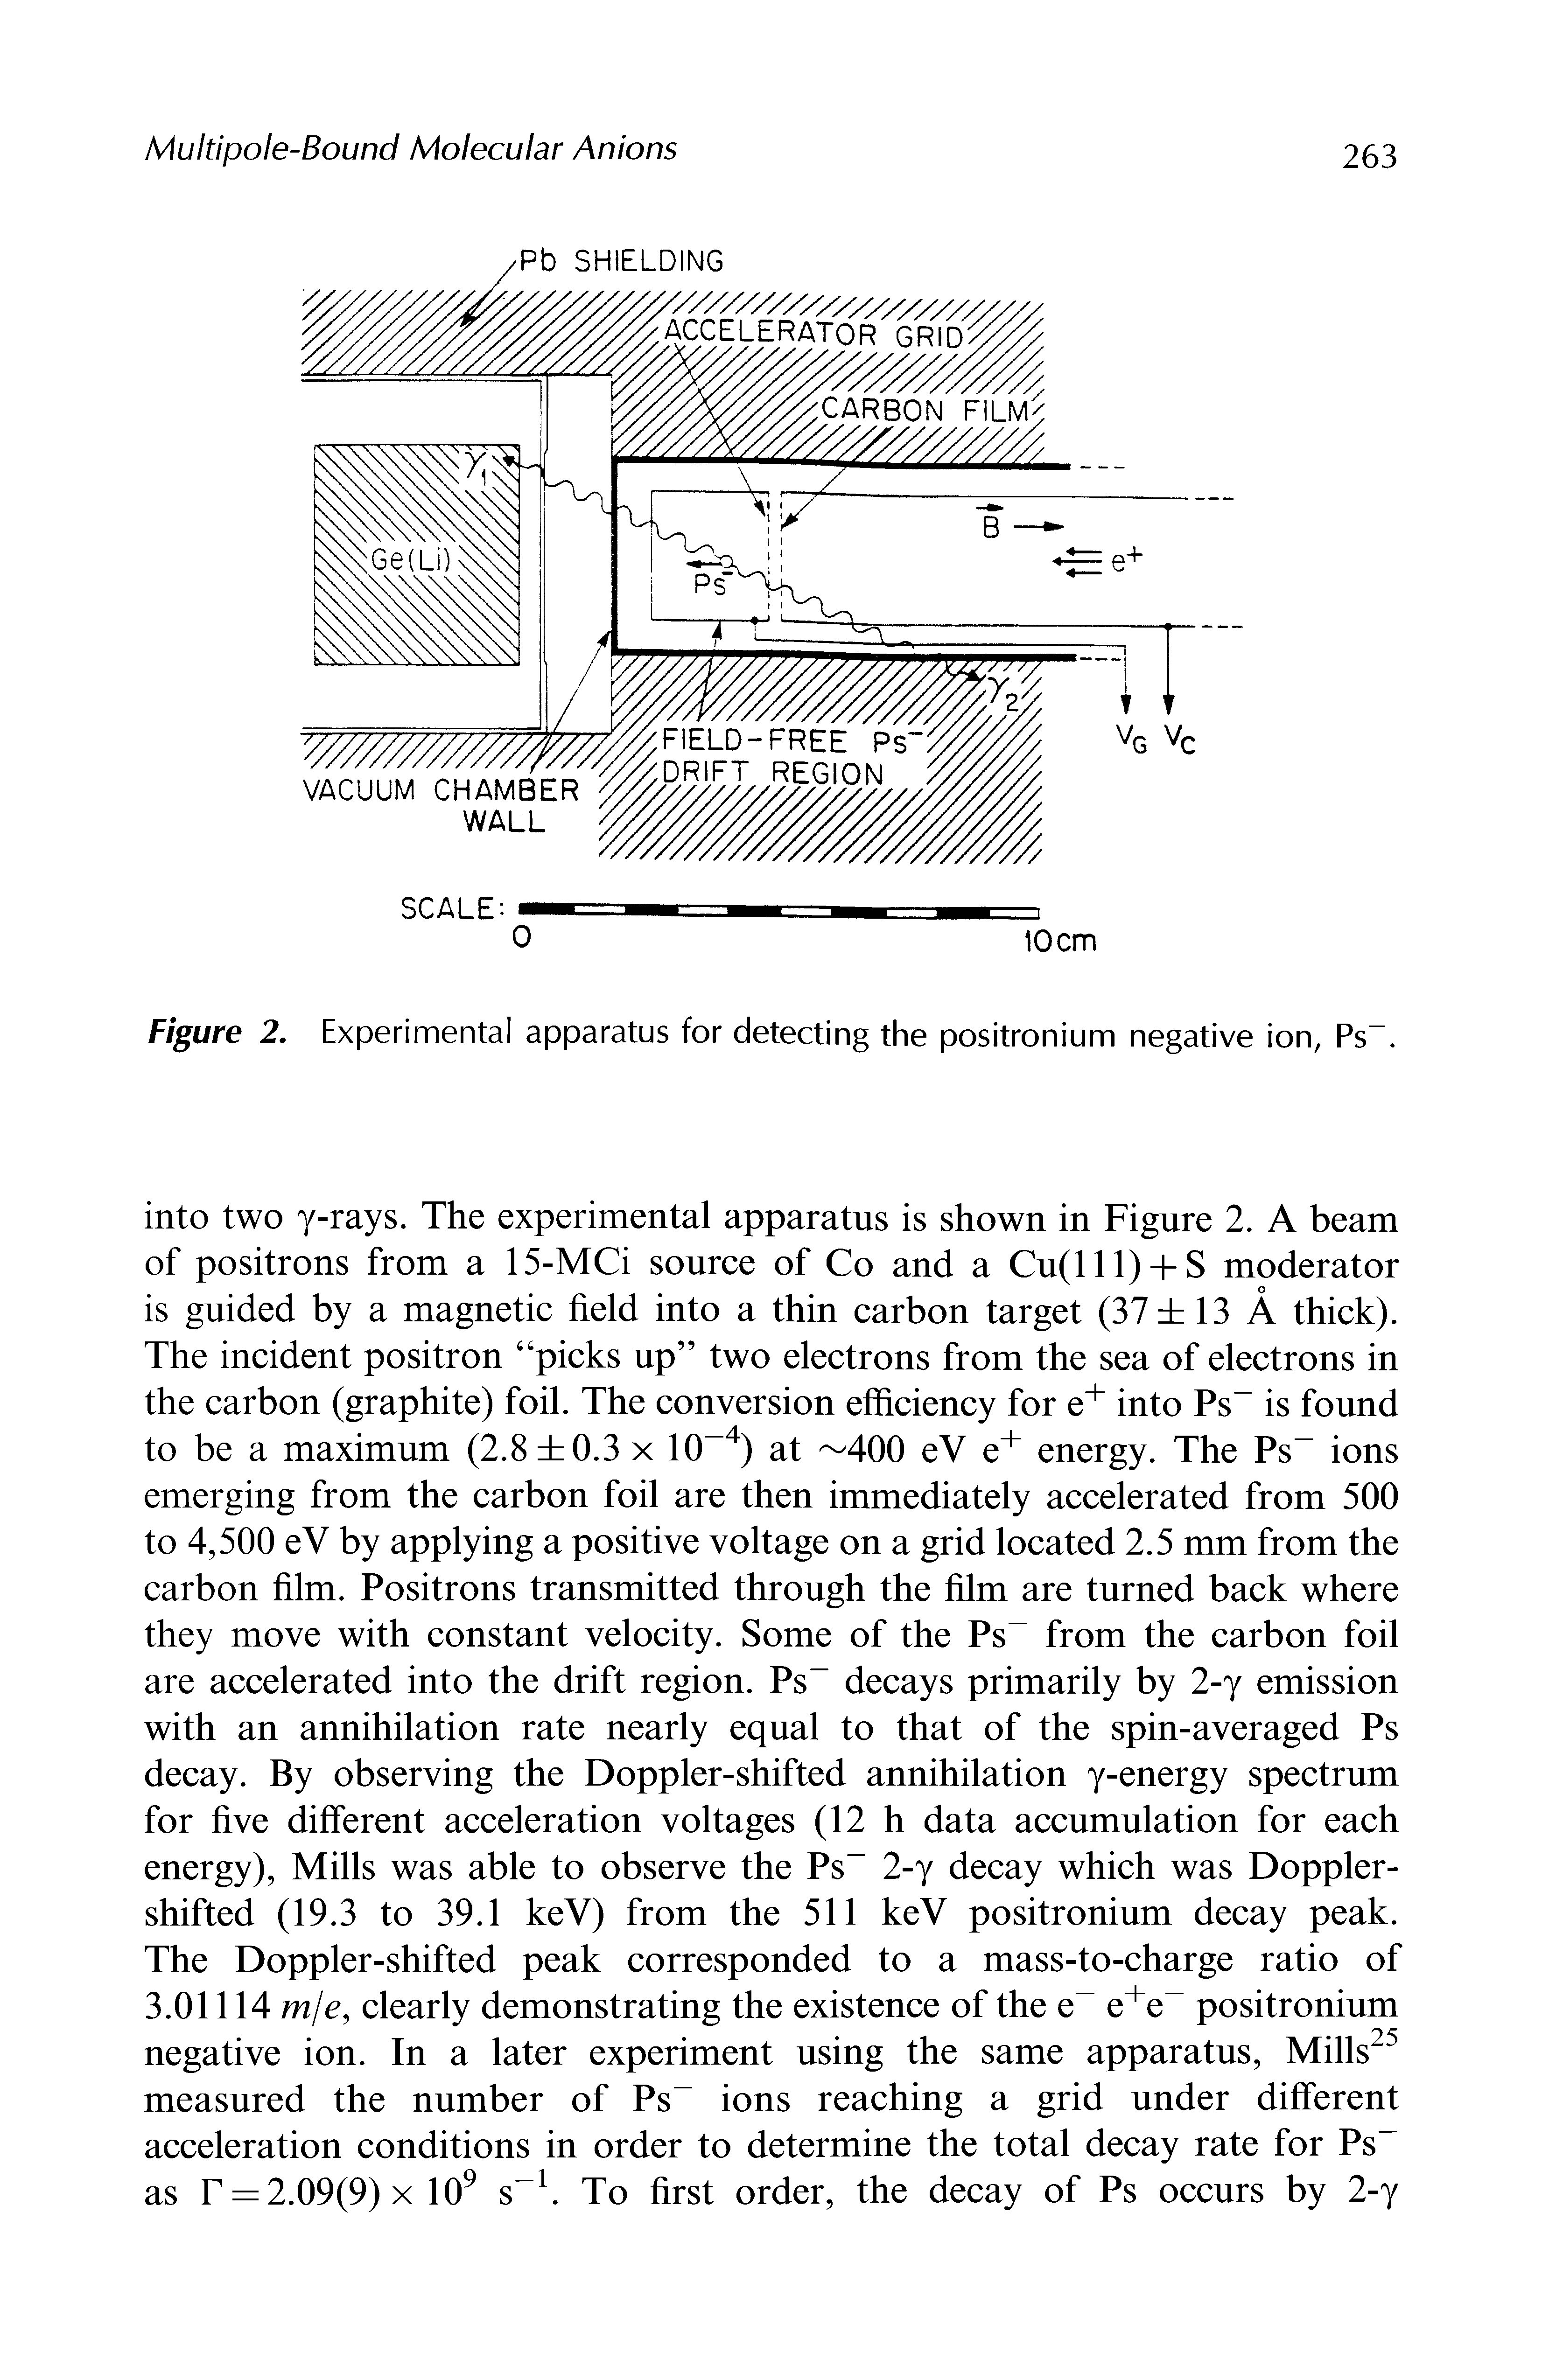 Figure 2, Experimental apparatus for detecting the positronium negative ion, Ps .